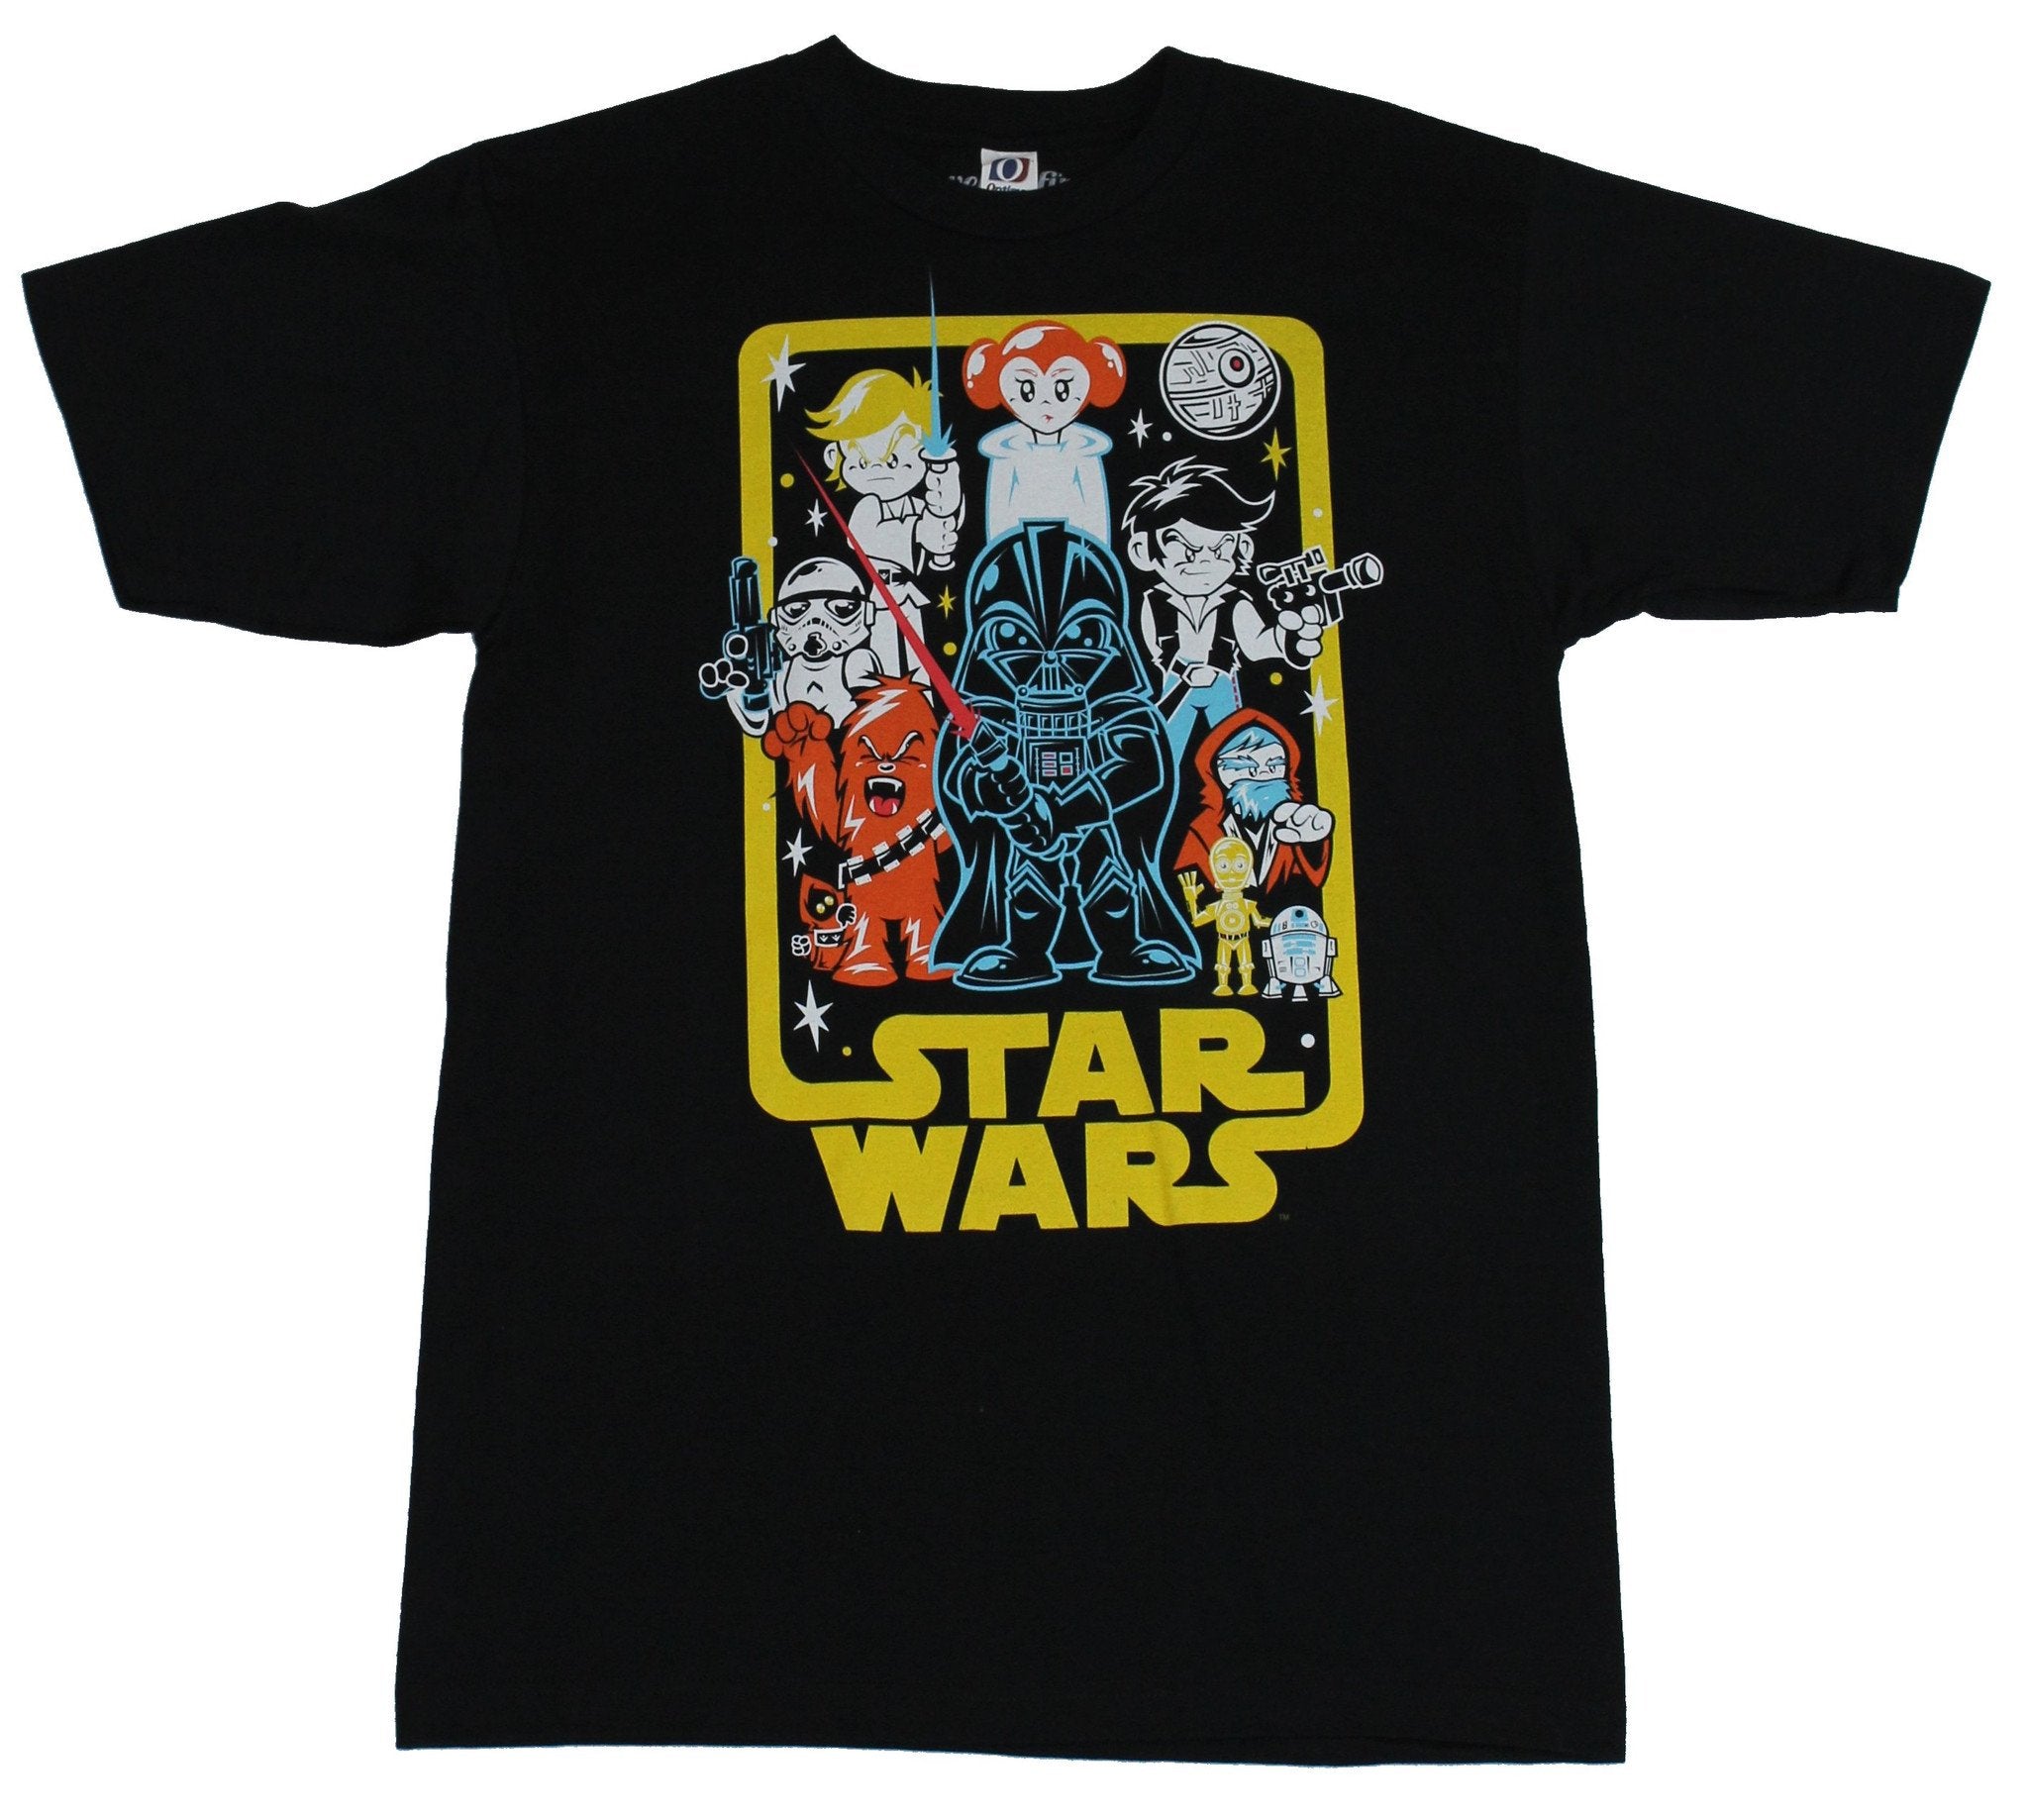 Star Wars Mens T-Shirt - Darth Vader Centered Cartoon Style Boxed Group Image